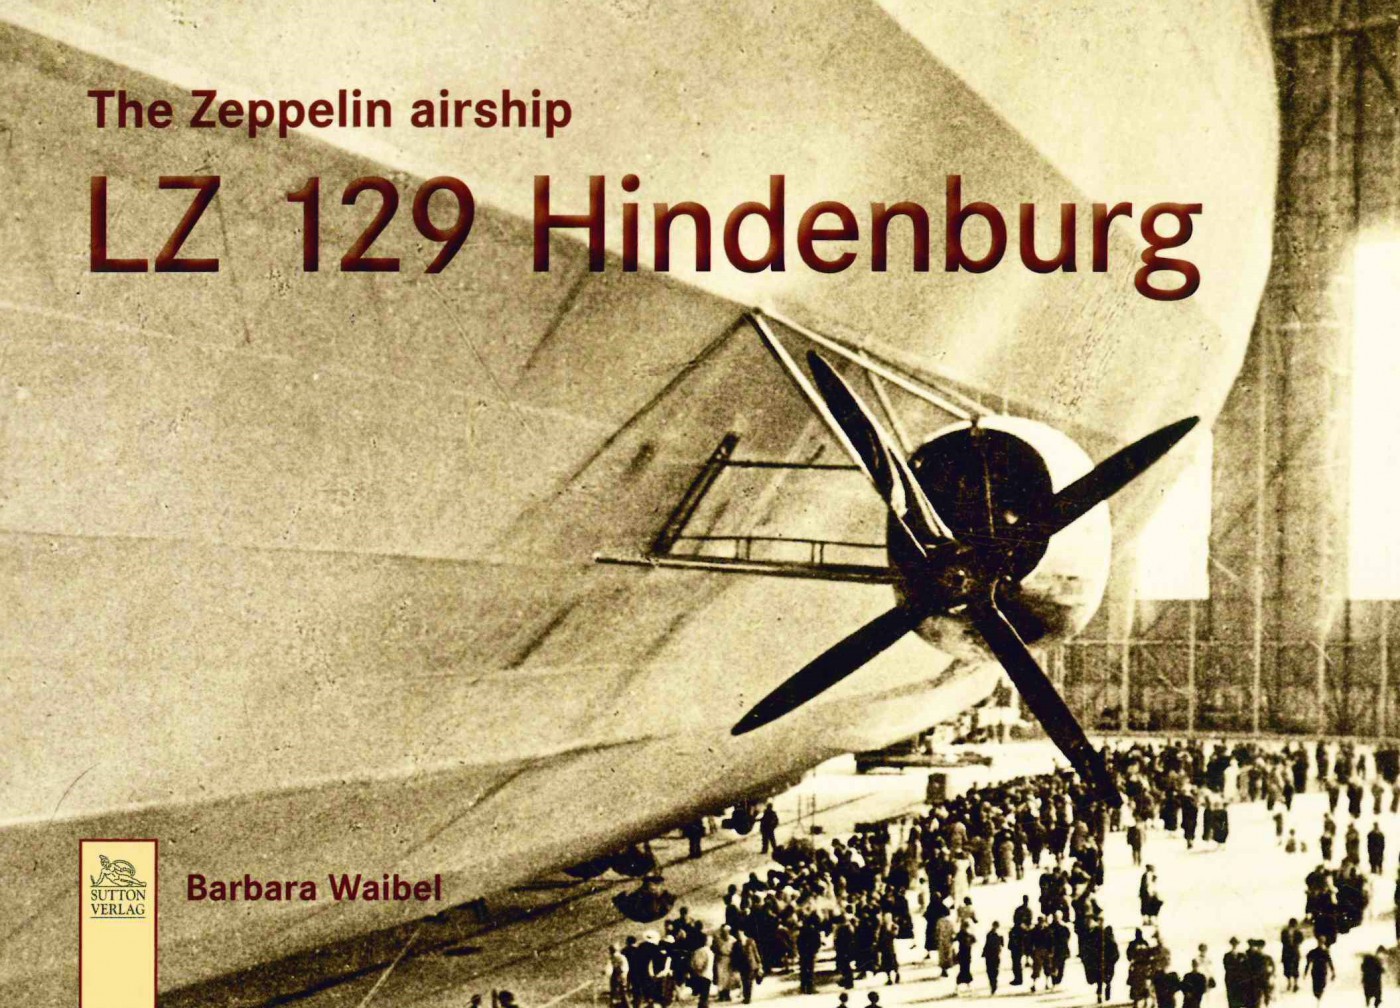 The Zeppelin airship LZ 129 Hindenburg